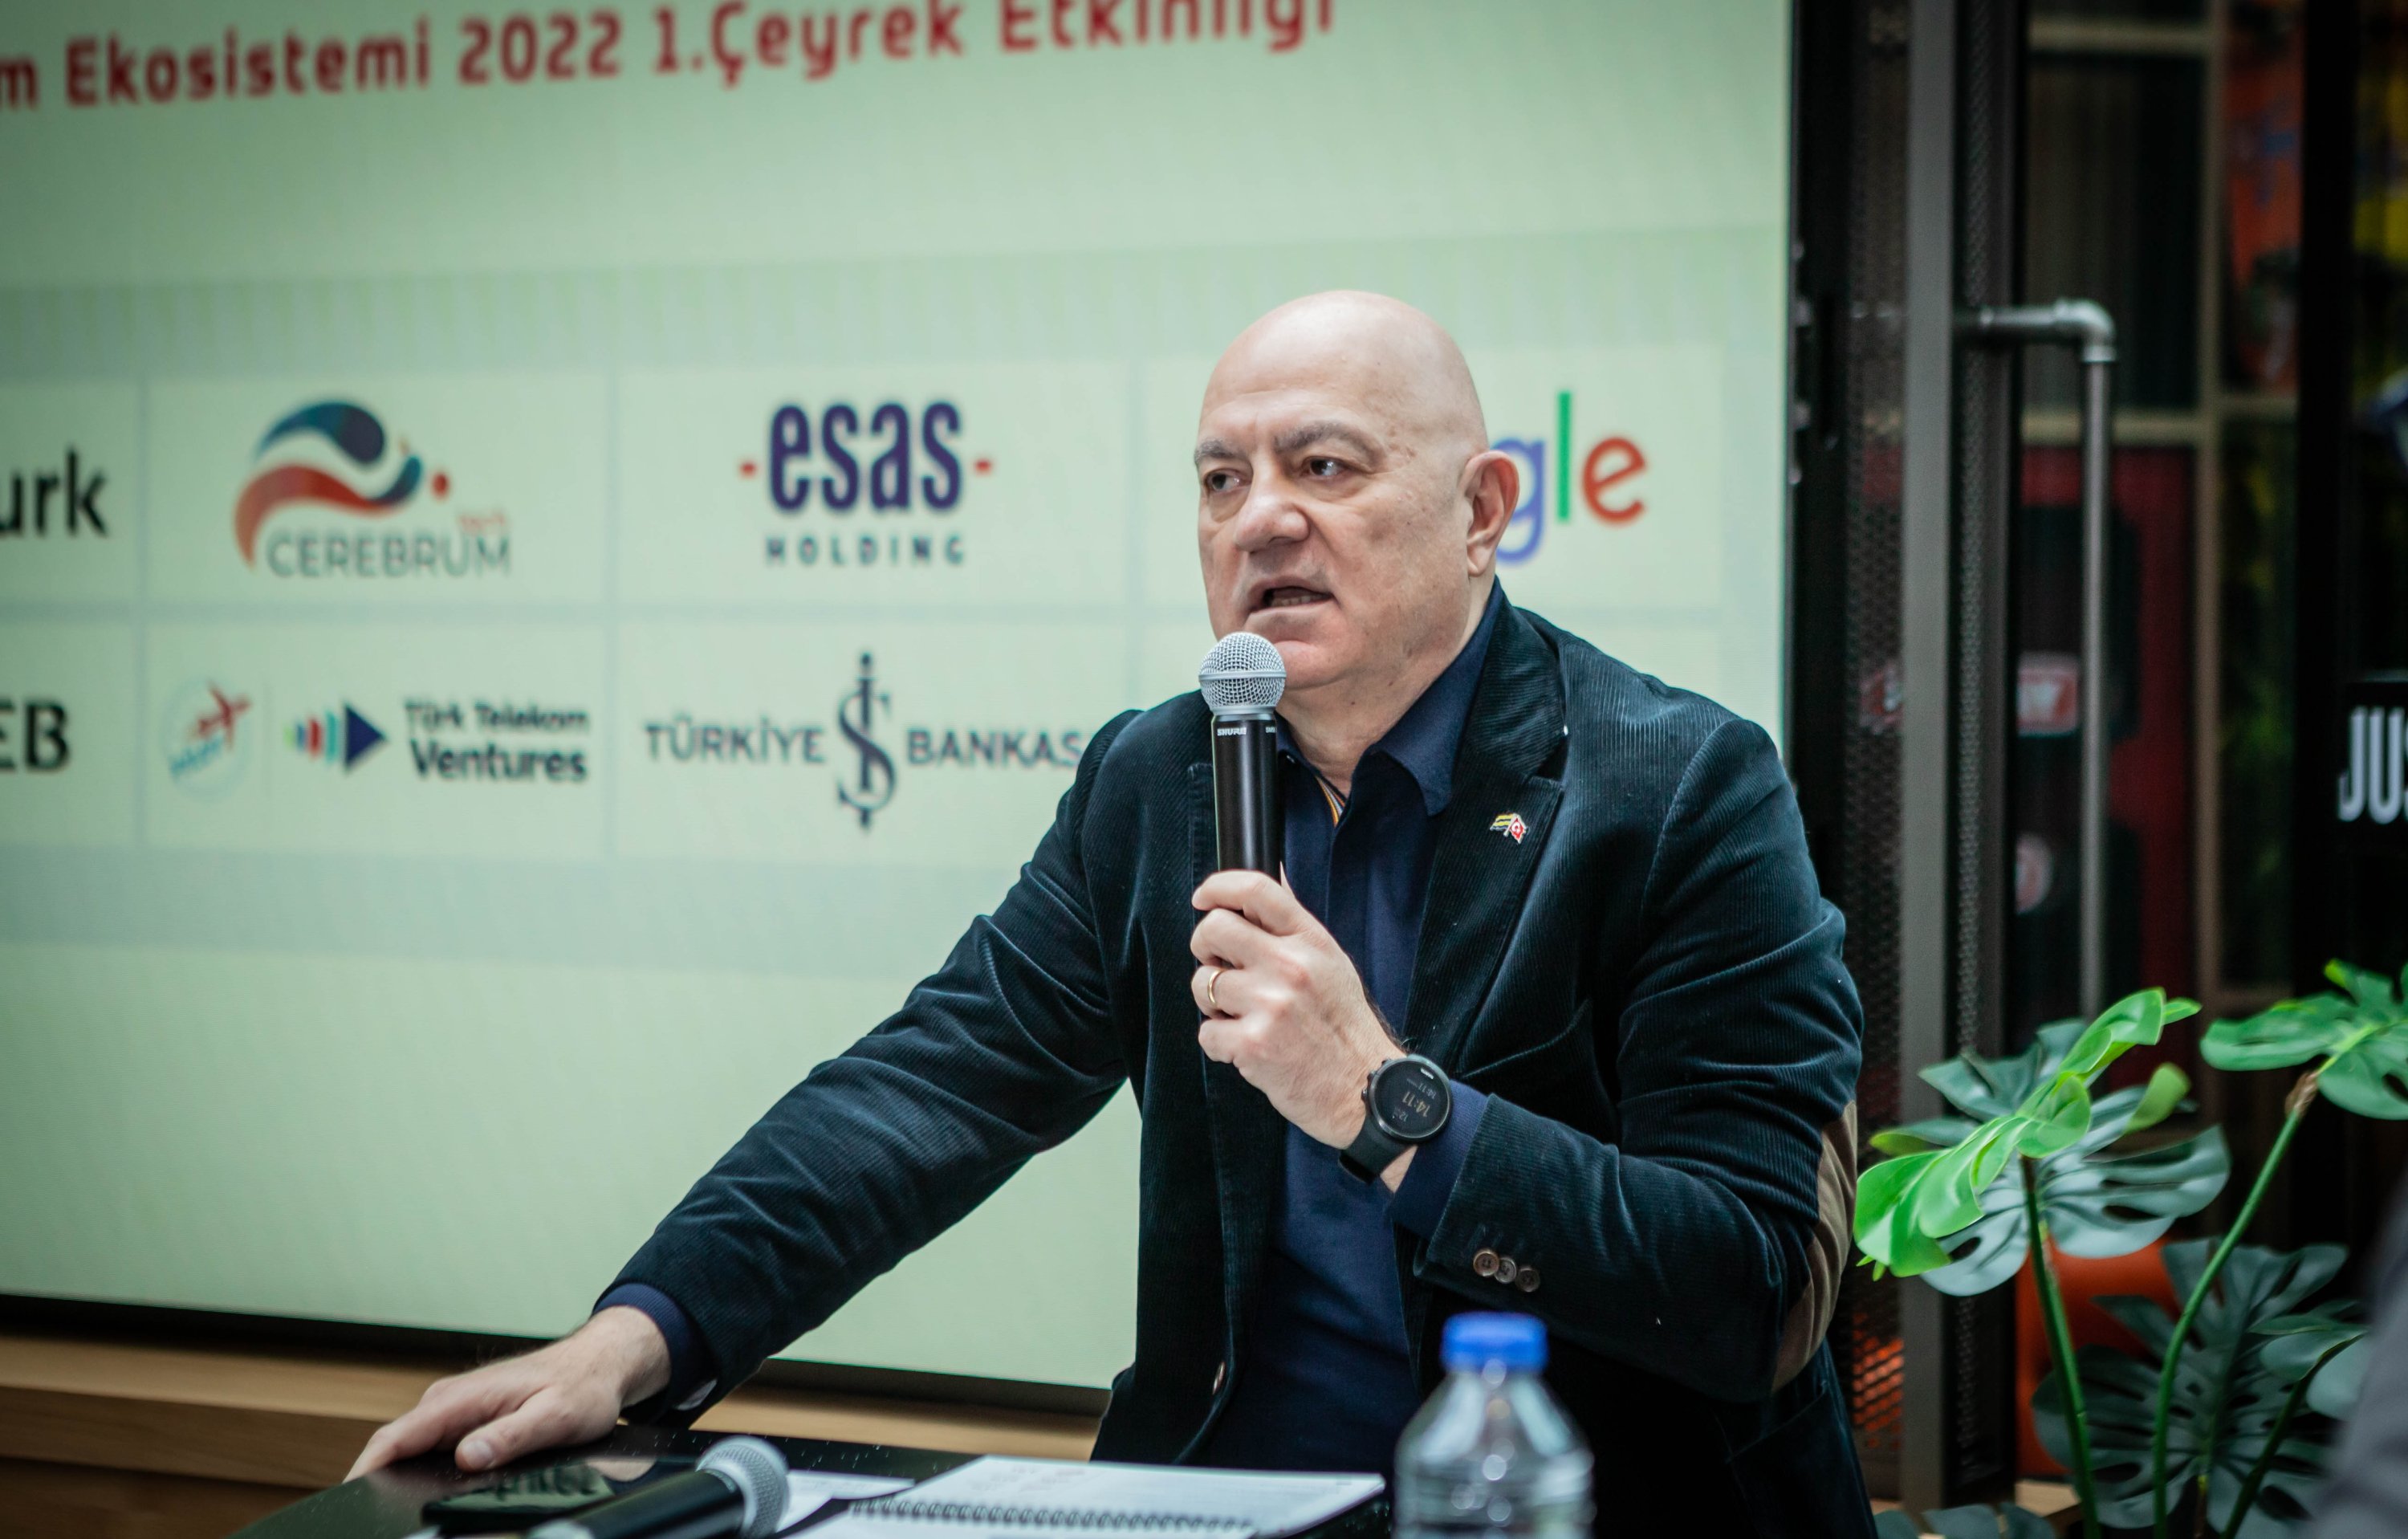 Çağtay Özdoğru, Esas Holding CEO, speaks during an event in Istanbul, Turkey, March 12, 2022. (Photo by Hatice Çınar)